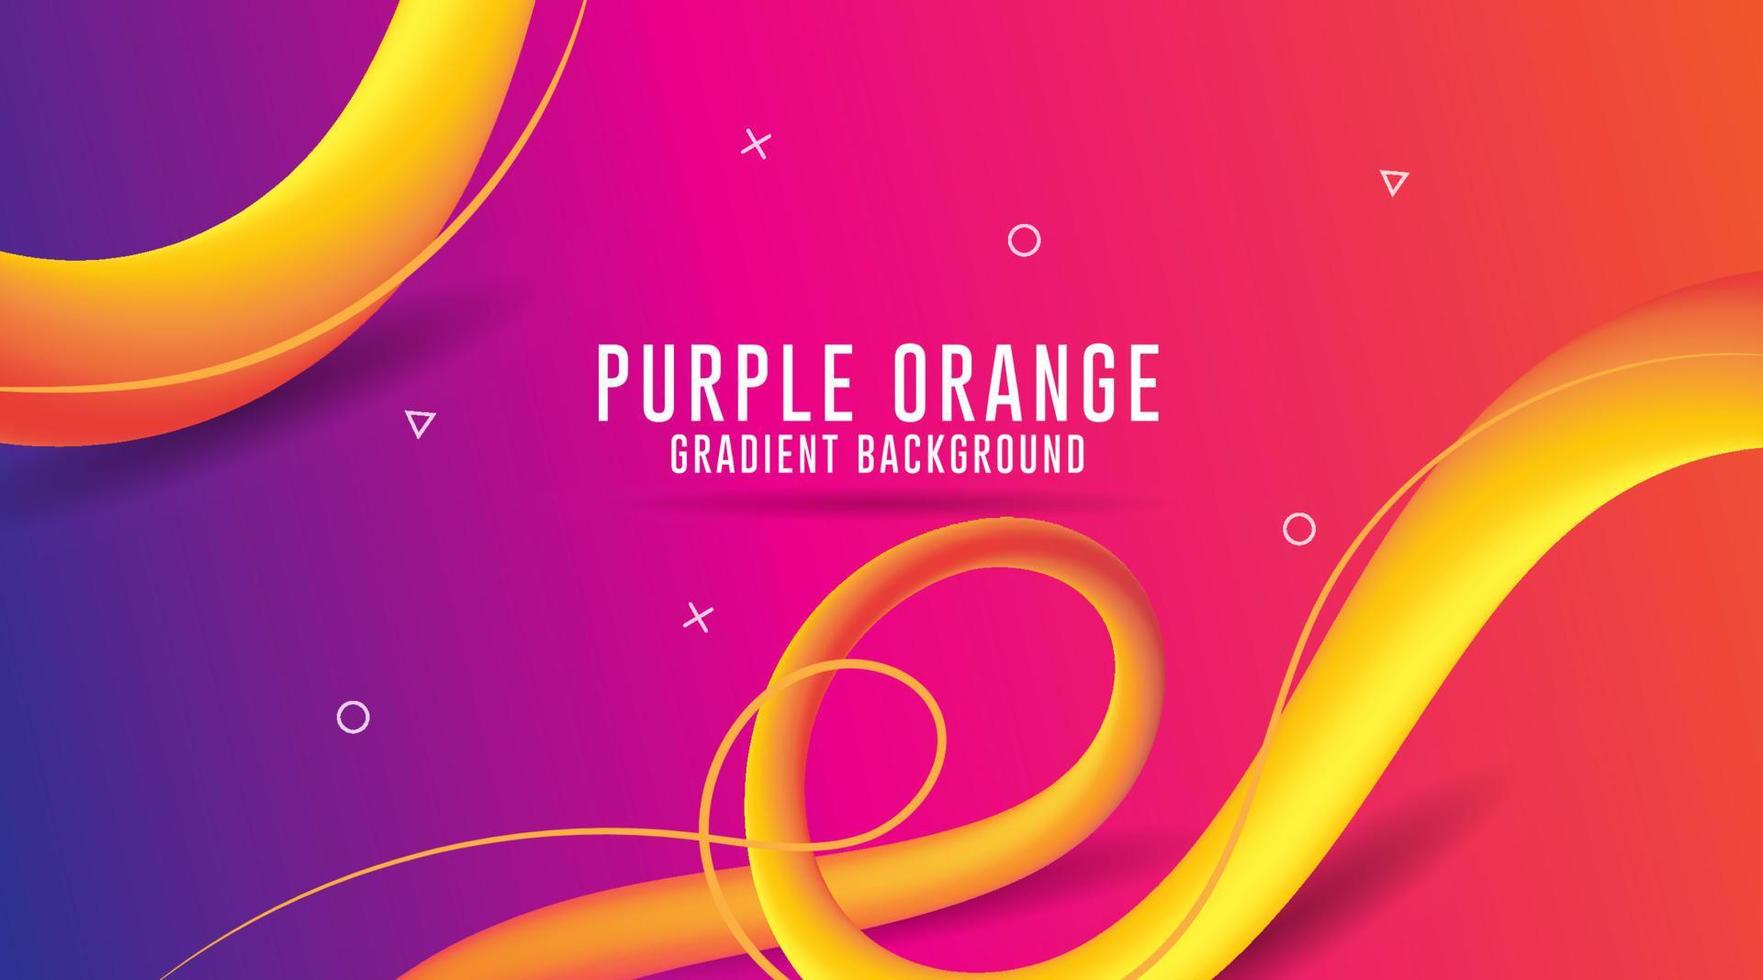 Purple and Orange Gradient Background, Gradient Abstract Background, Full color abstract background vector